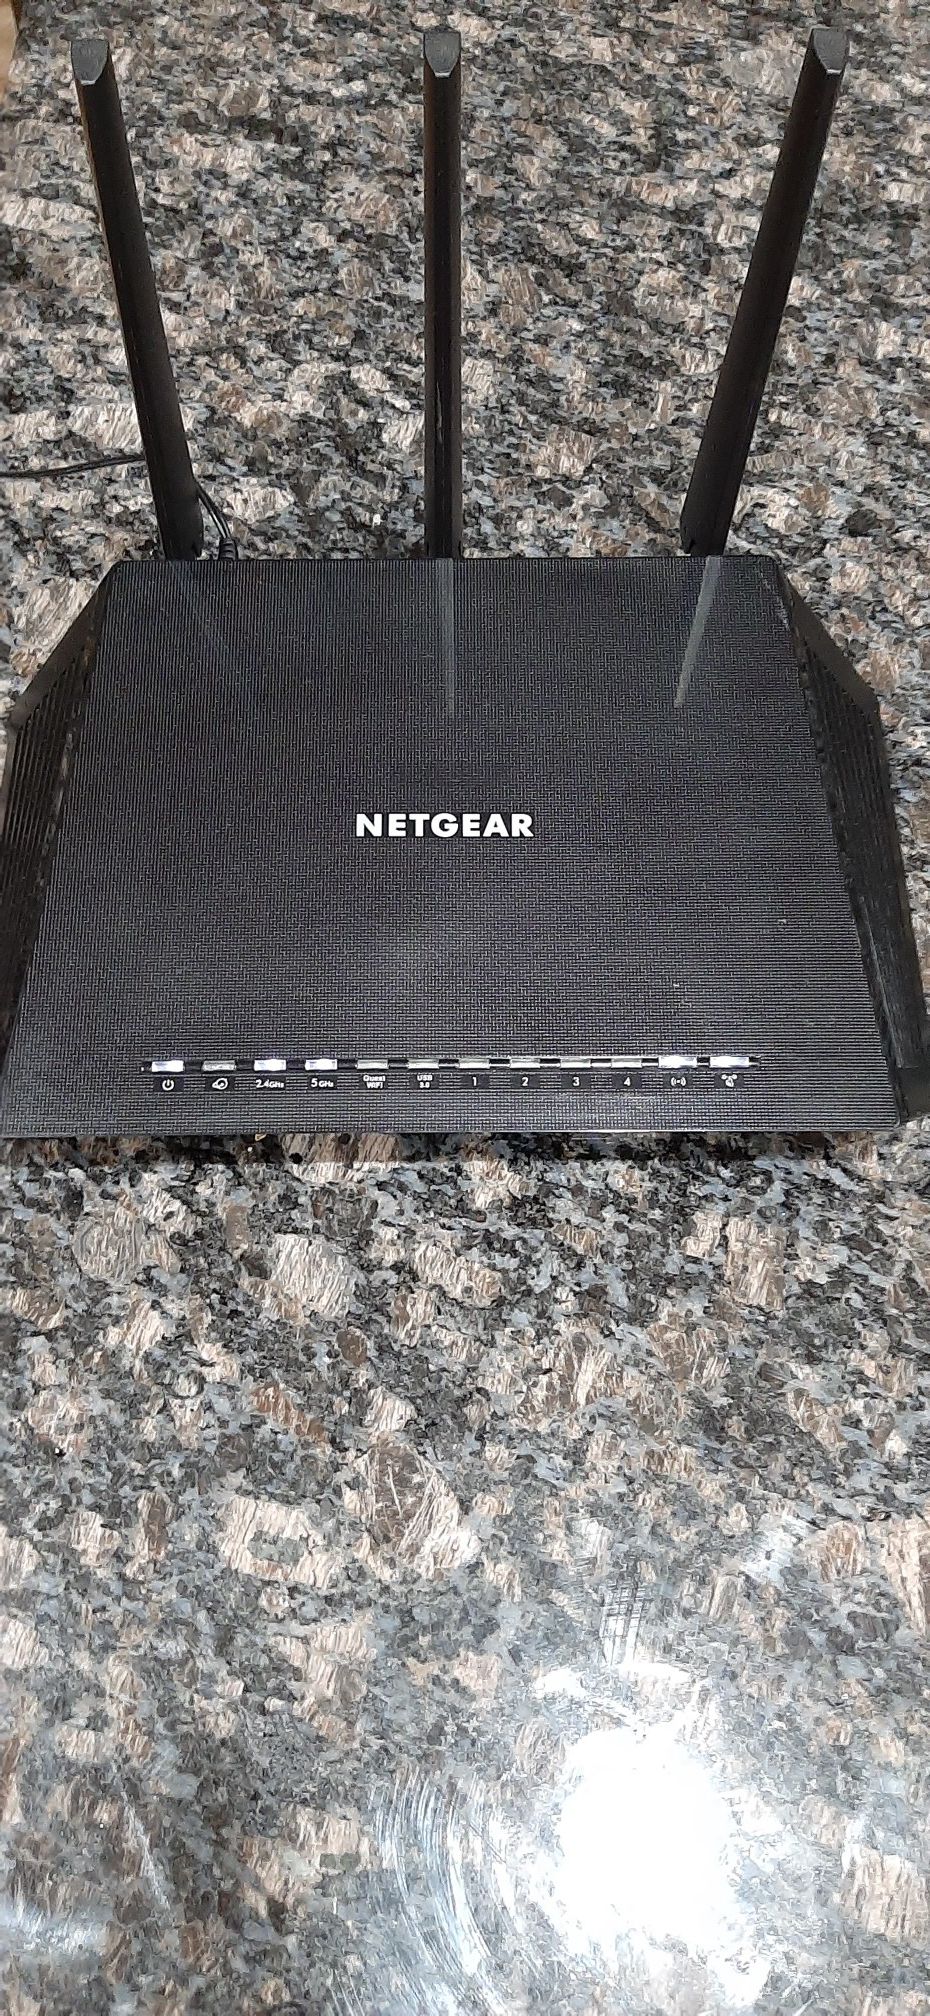 Netgear R6900 Dualband AC 1900 wifi router